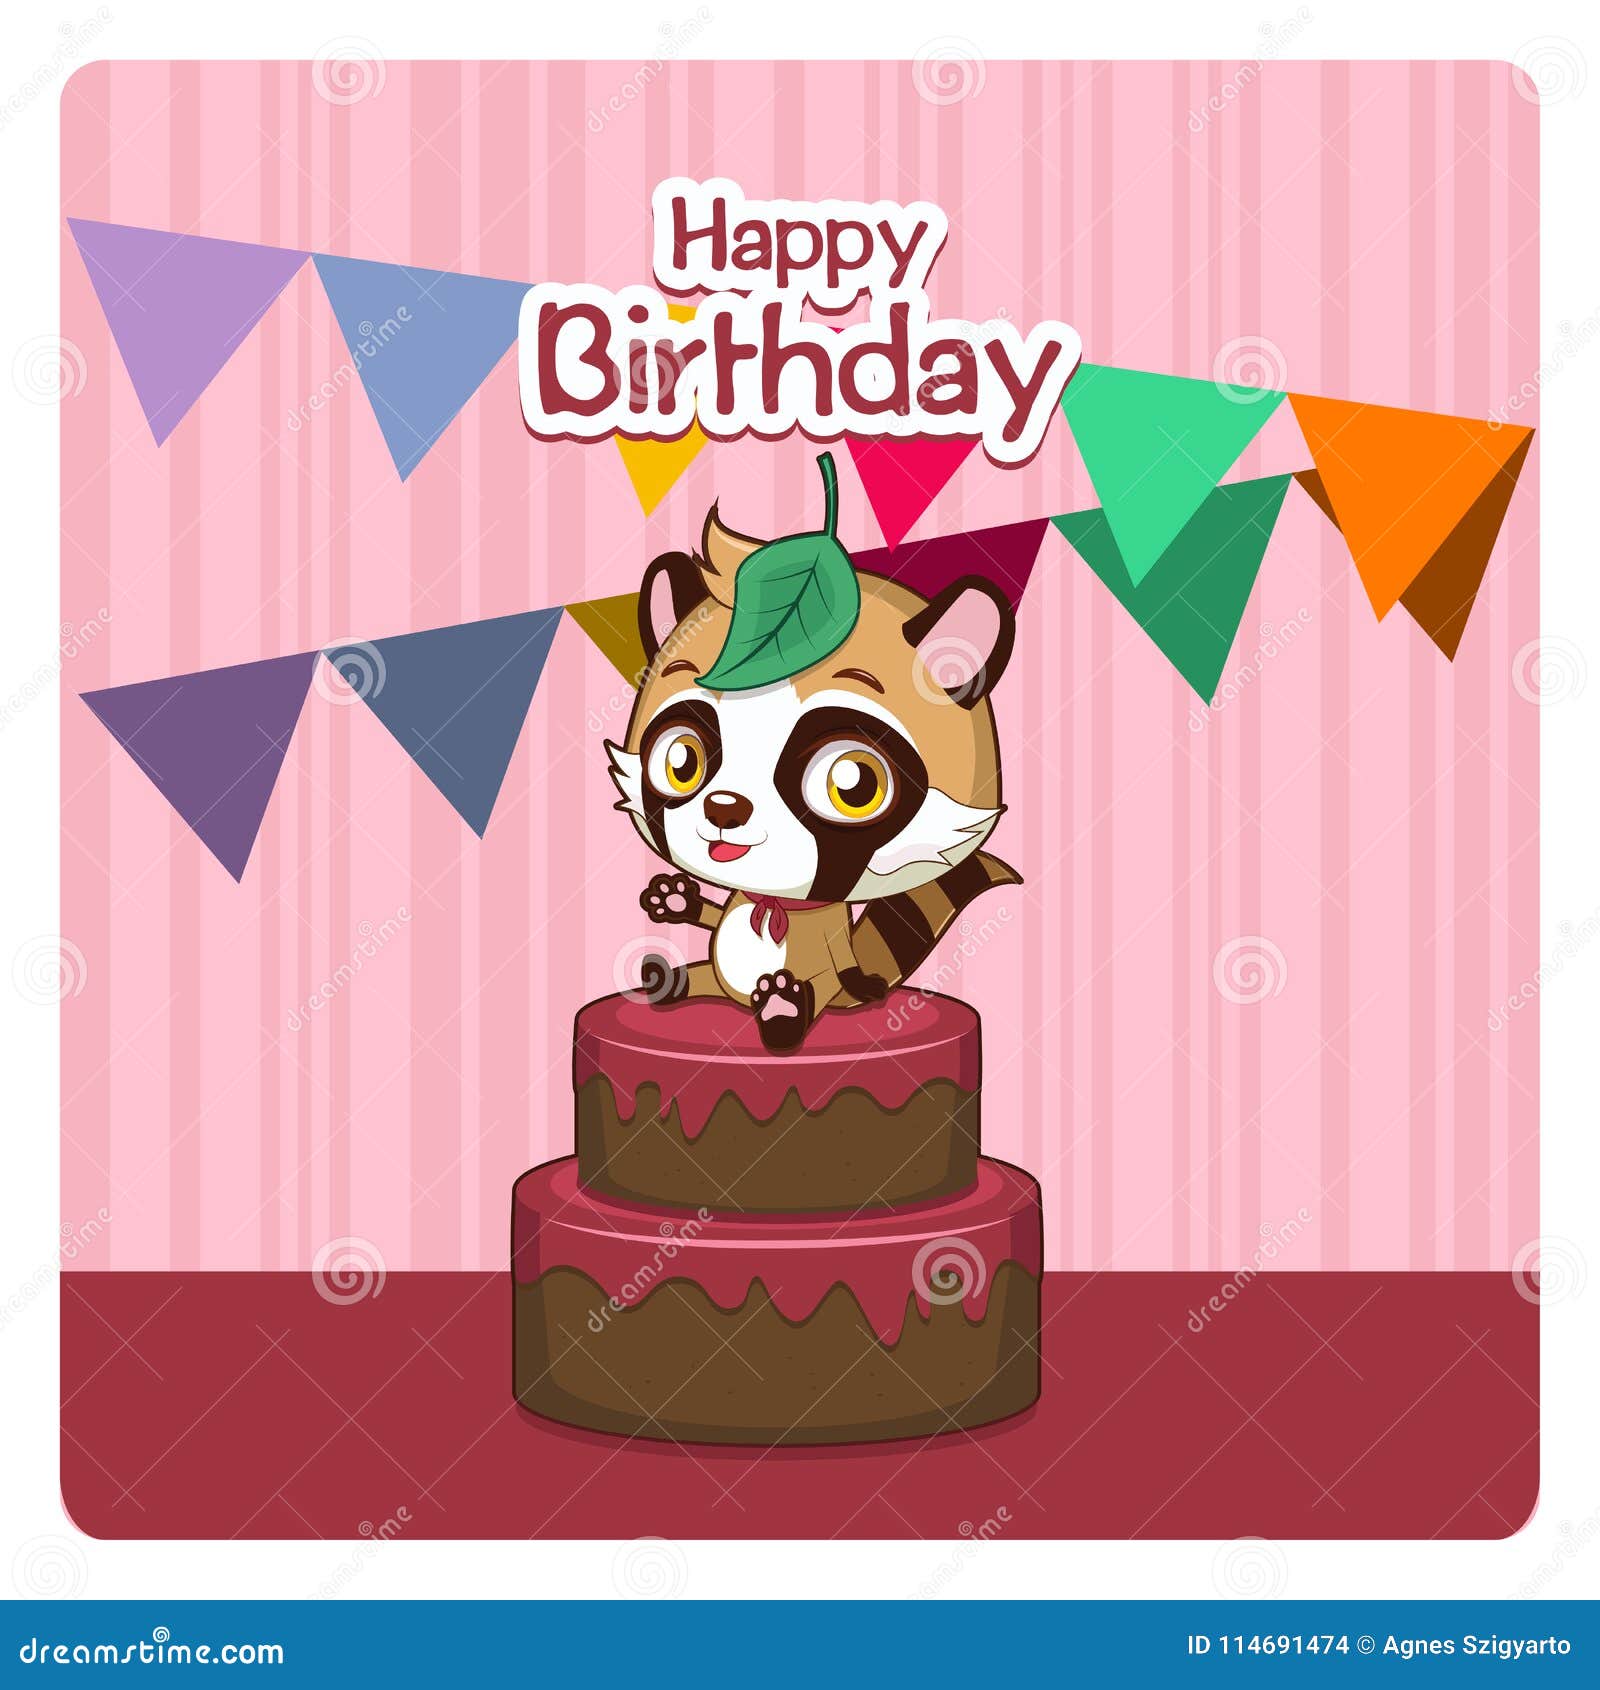 cute birthday greeting with a raccon dog